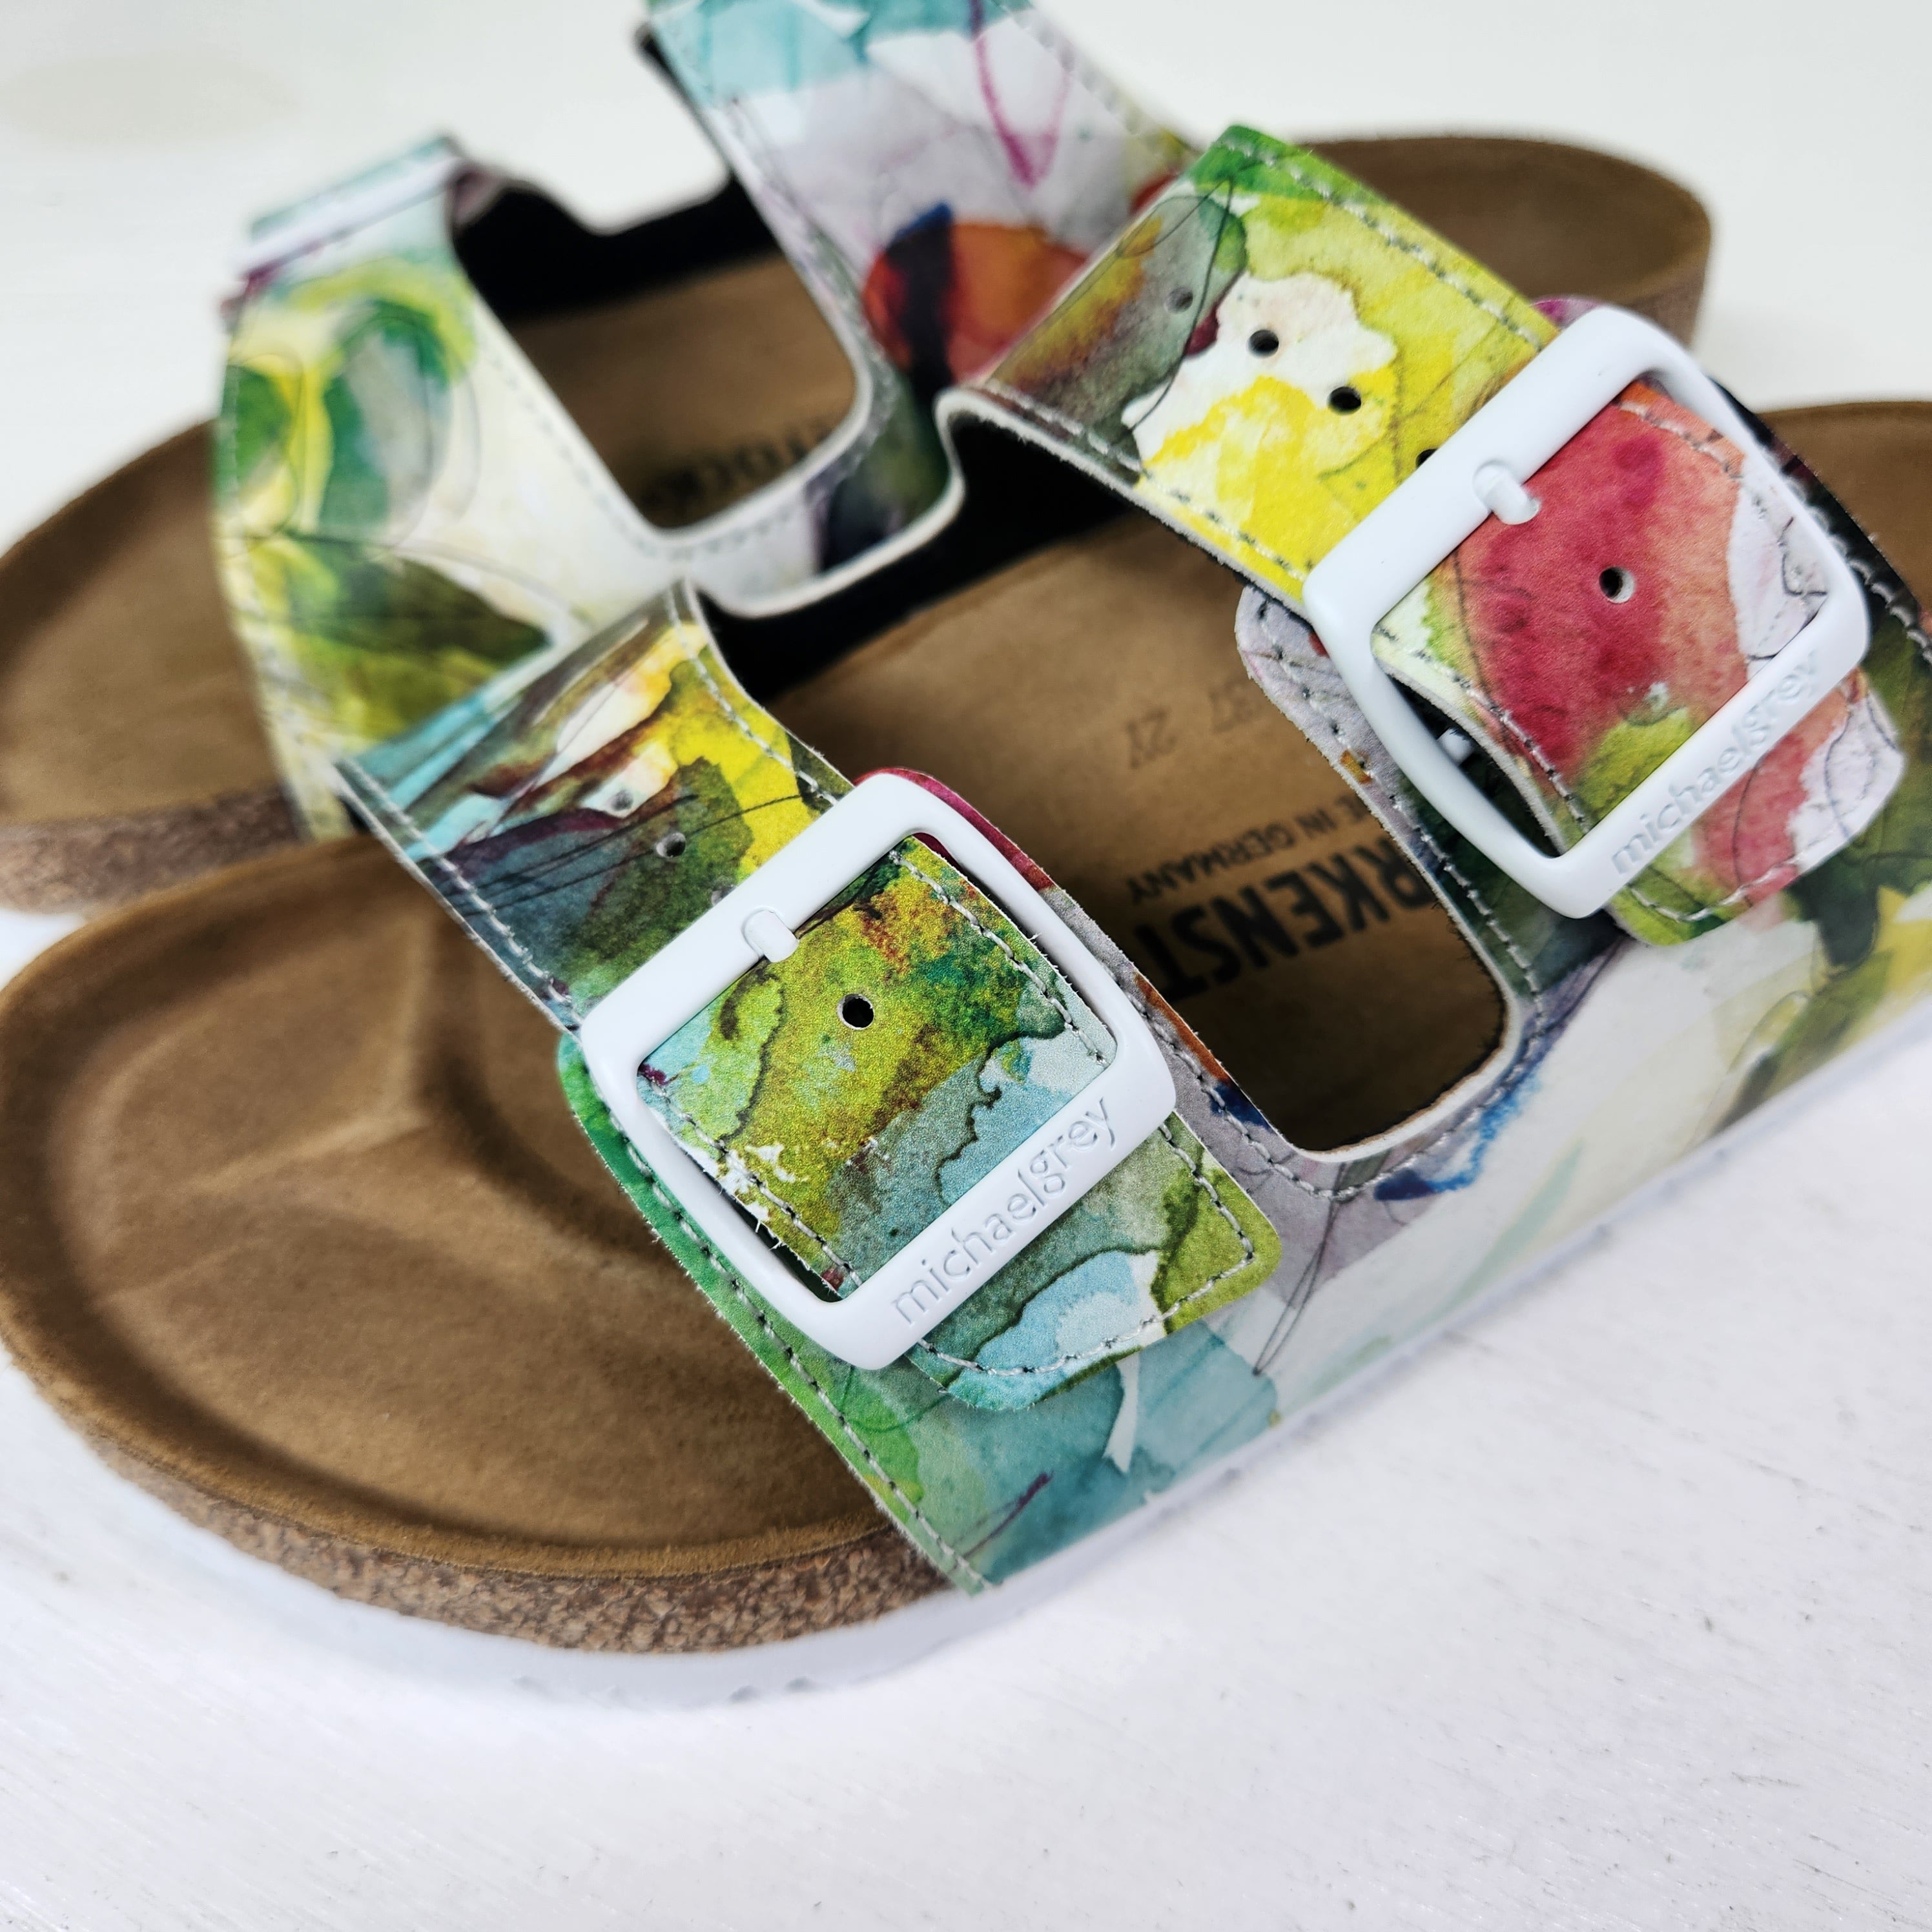 Art for your feet! Artist Cindy Larimore offers custom Birkenstock